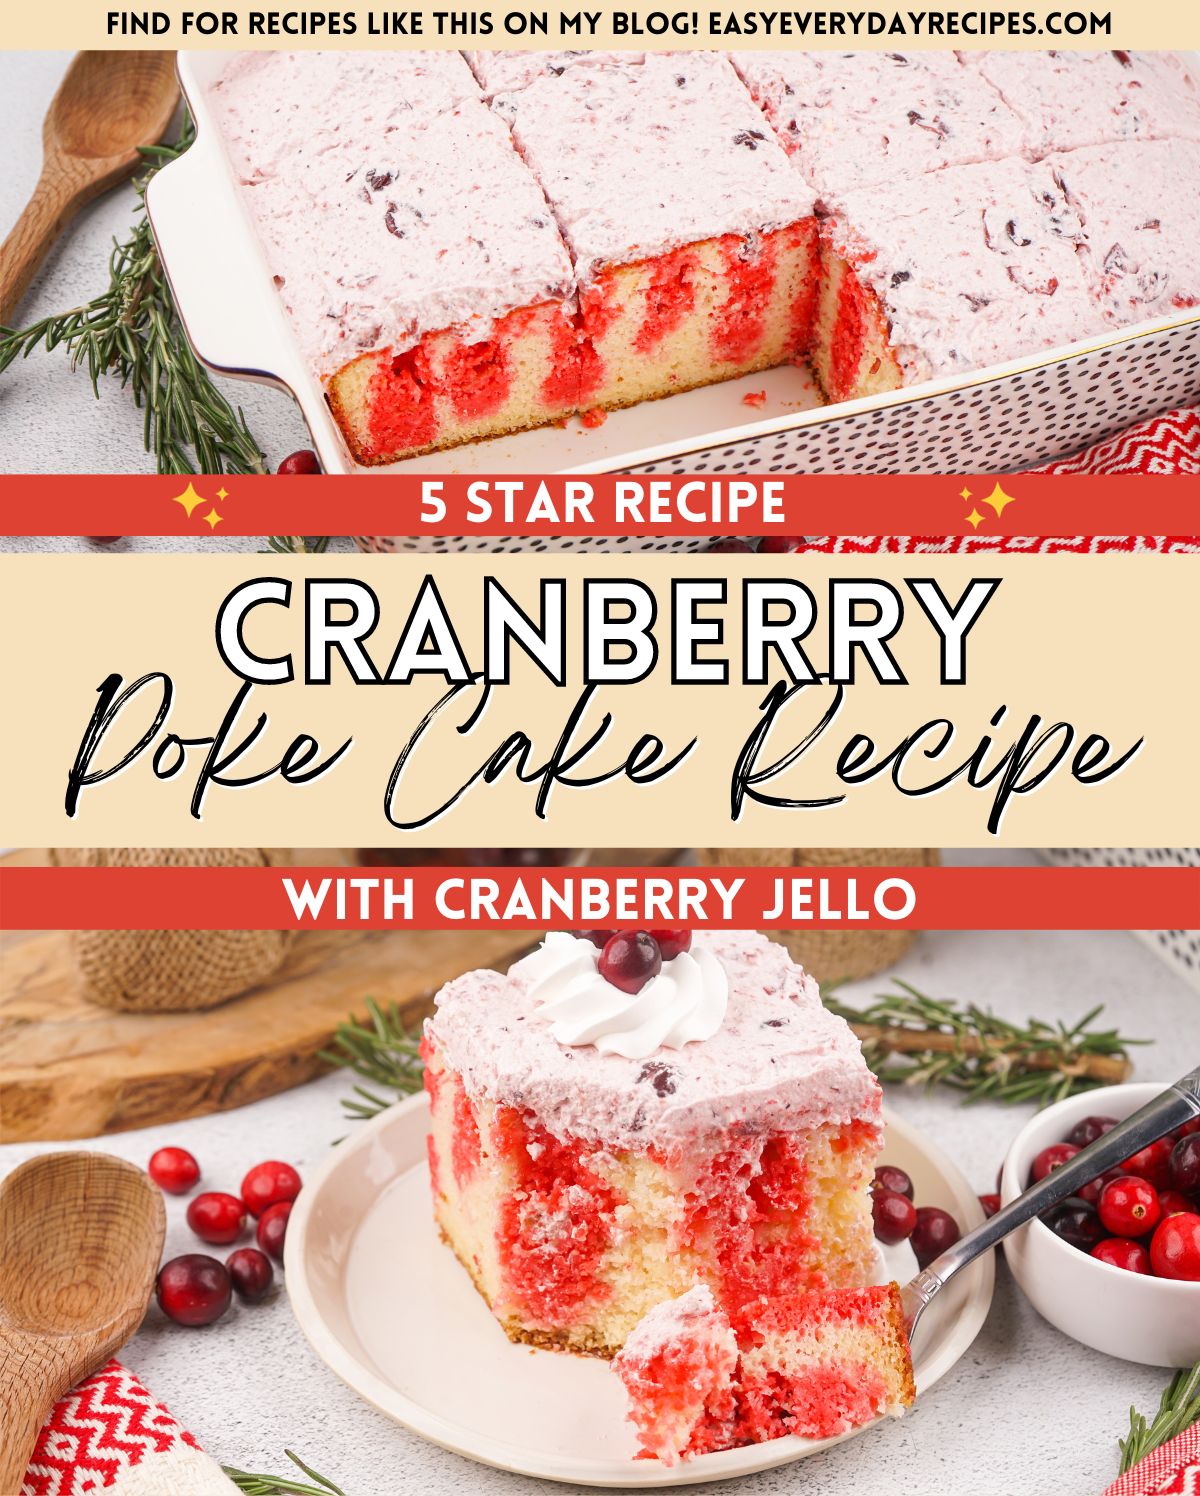 5 star cranberry dole cake recipe with cranberry jello.